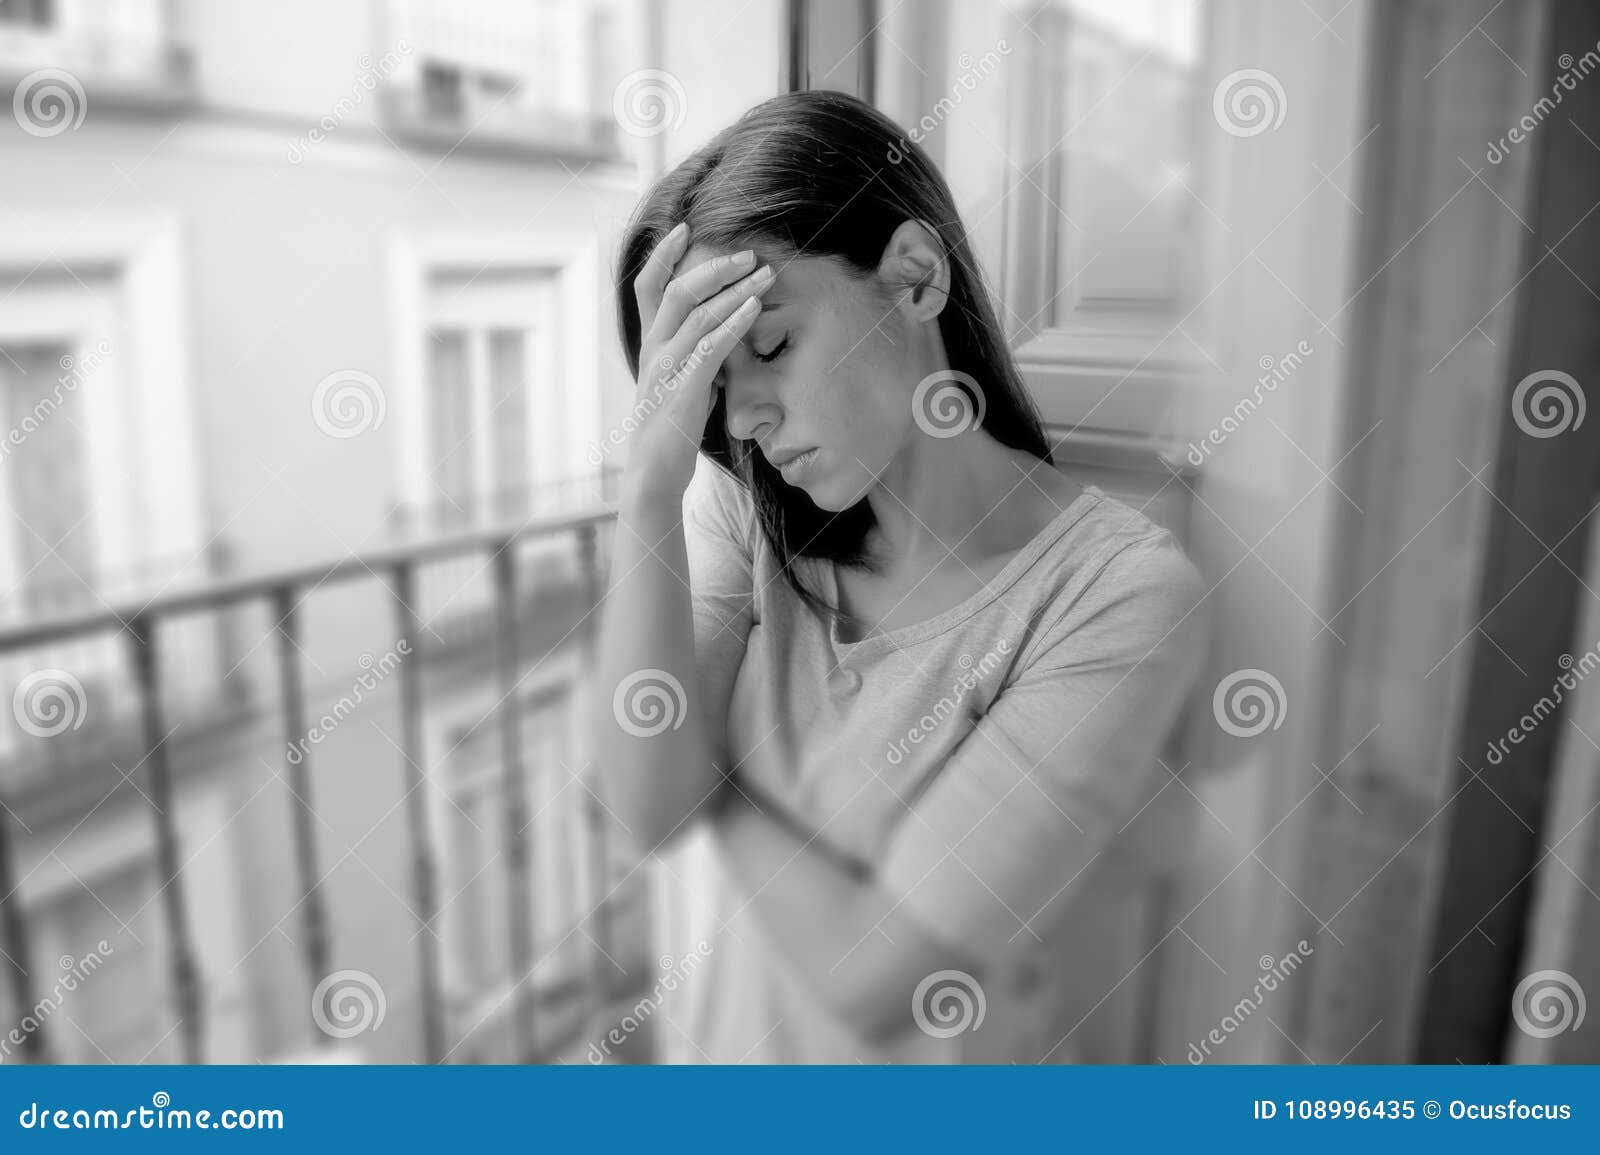 sad desperate hispanic girl at home balcony looking depressed suffering terrible migraine headache disorder or depression